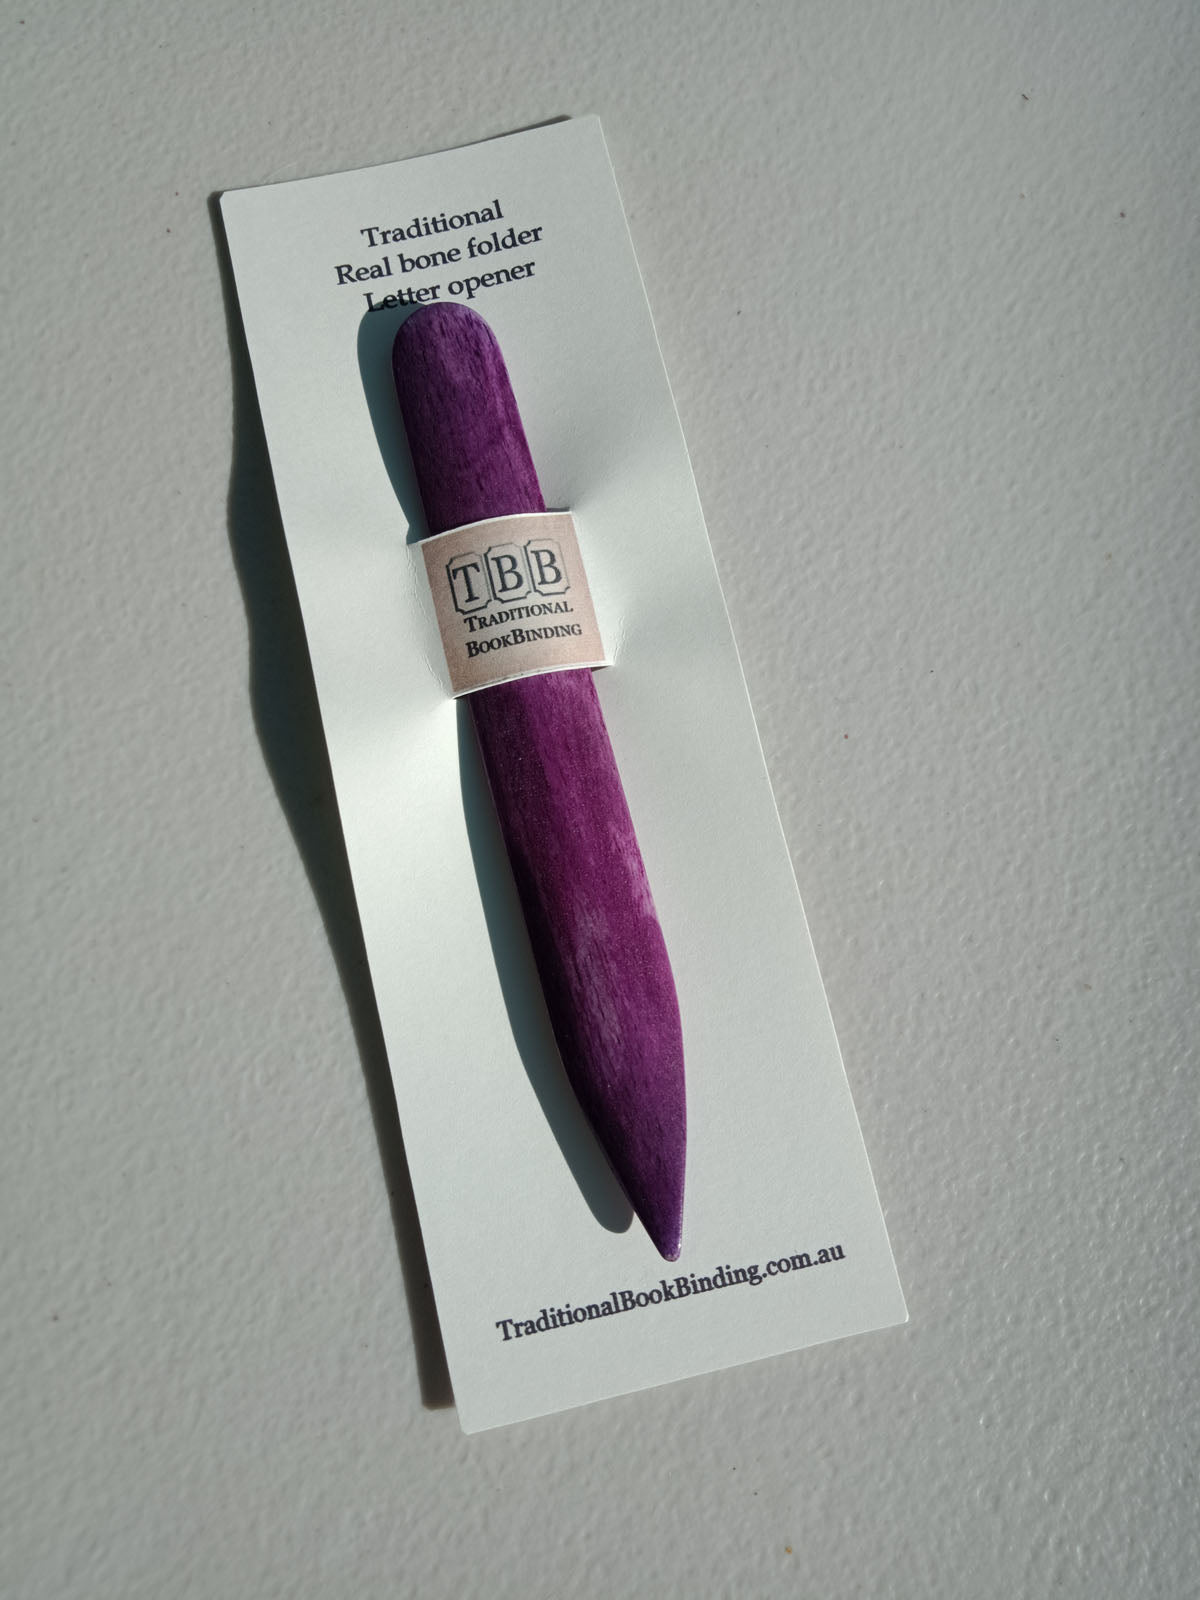 Traditional real bone folder or letter opener- Purple